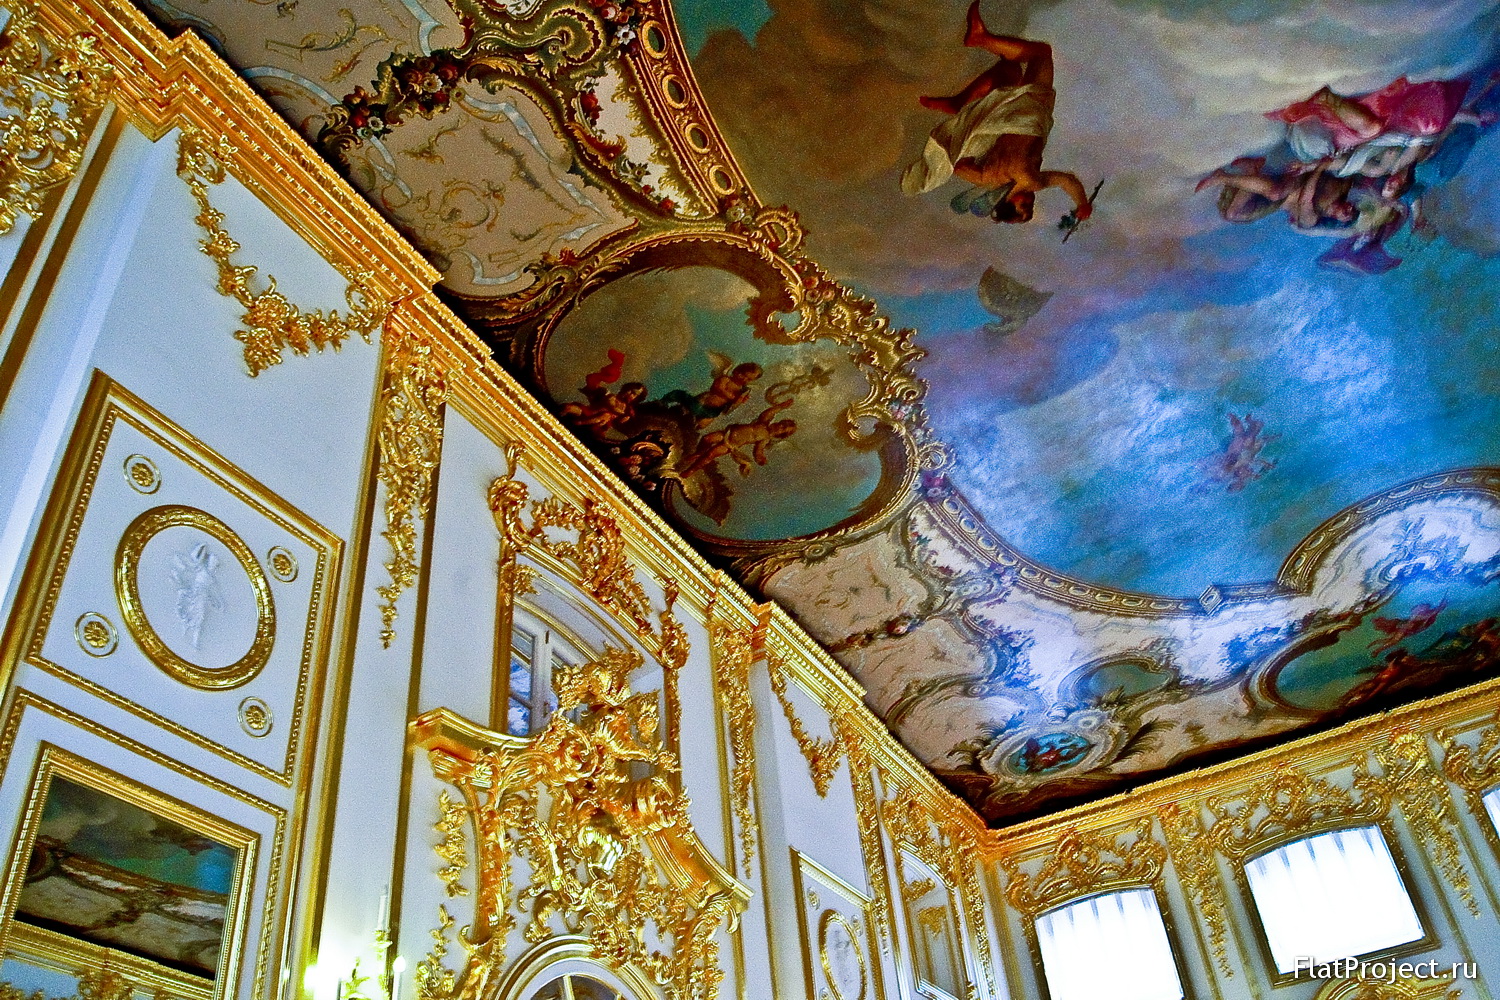 The Catherine Palace interiors – photo 307